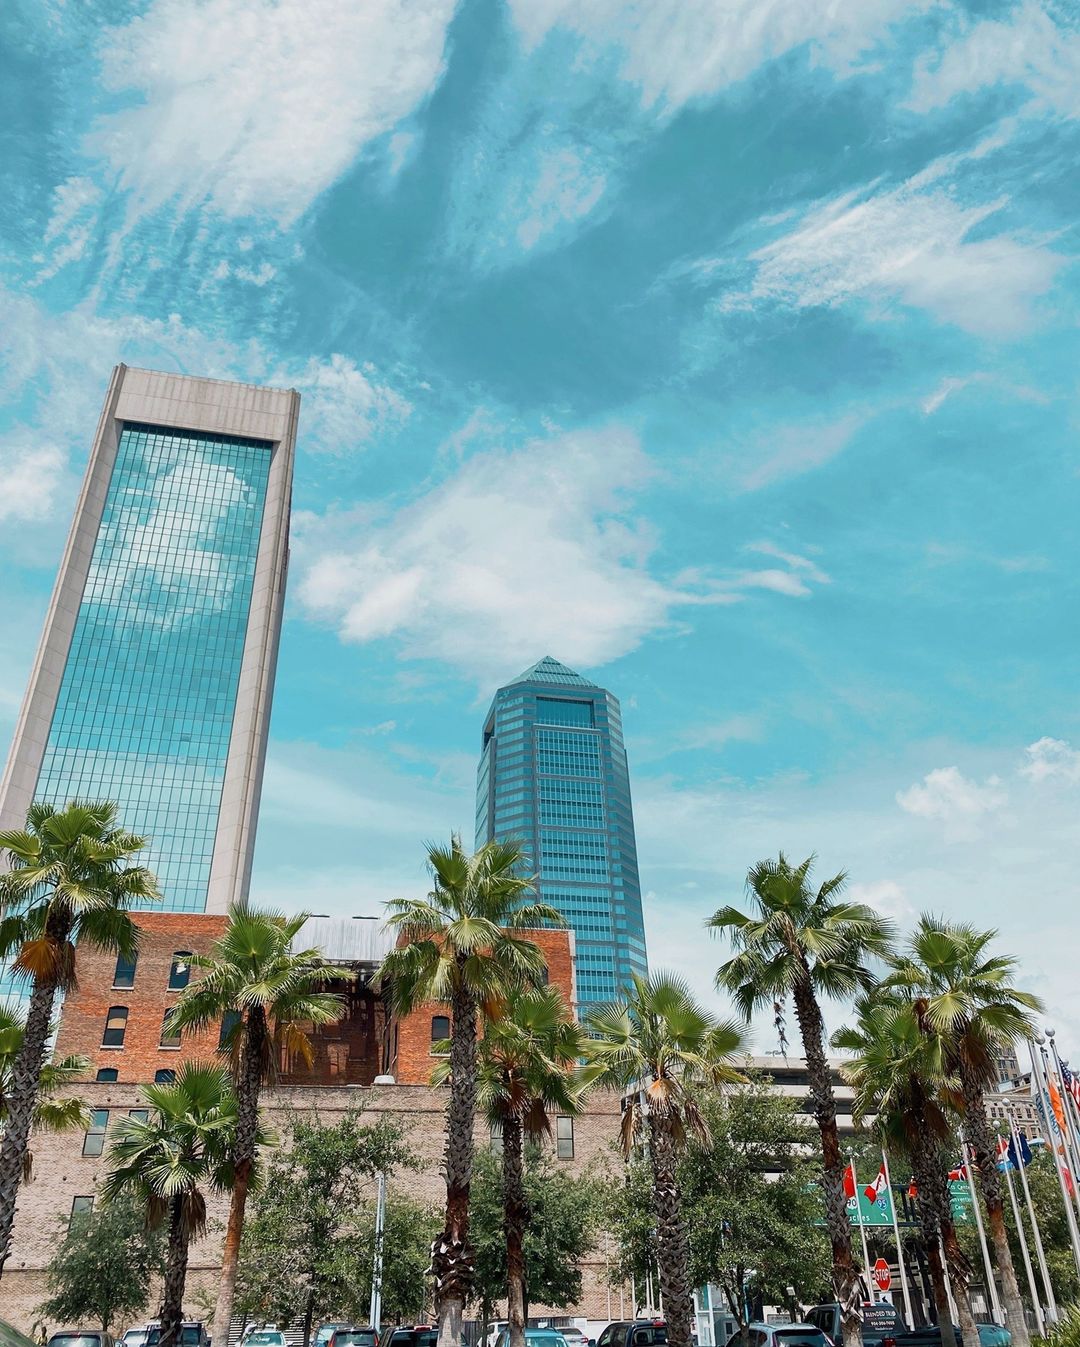 Street View of the Jacksonville, FL Skyline. Photo by Instagram user @904happyhour